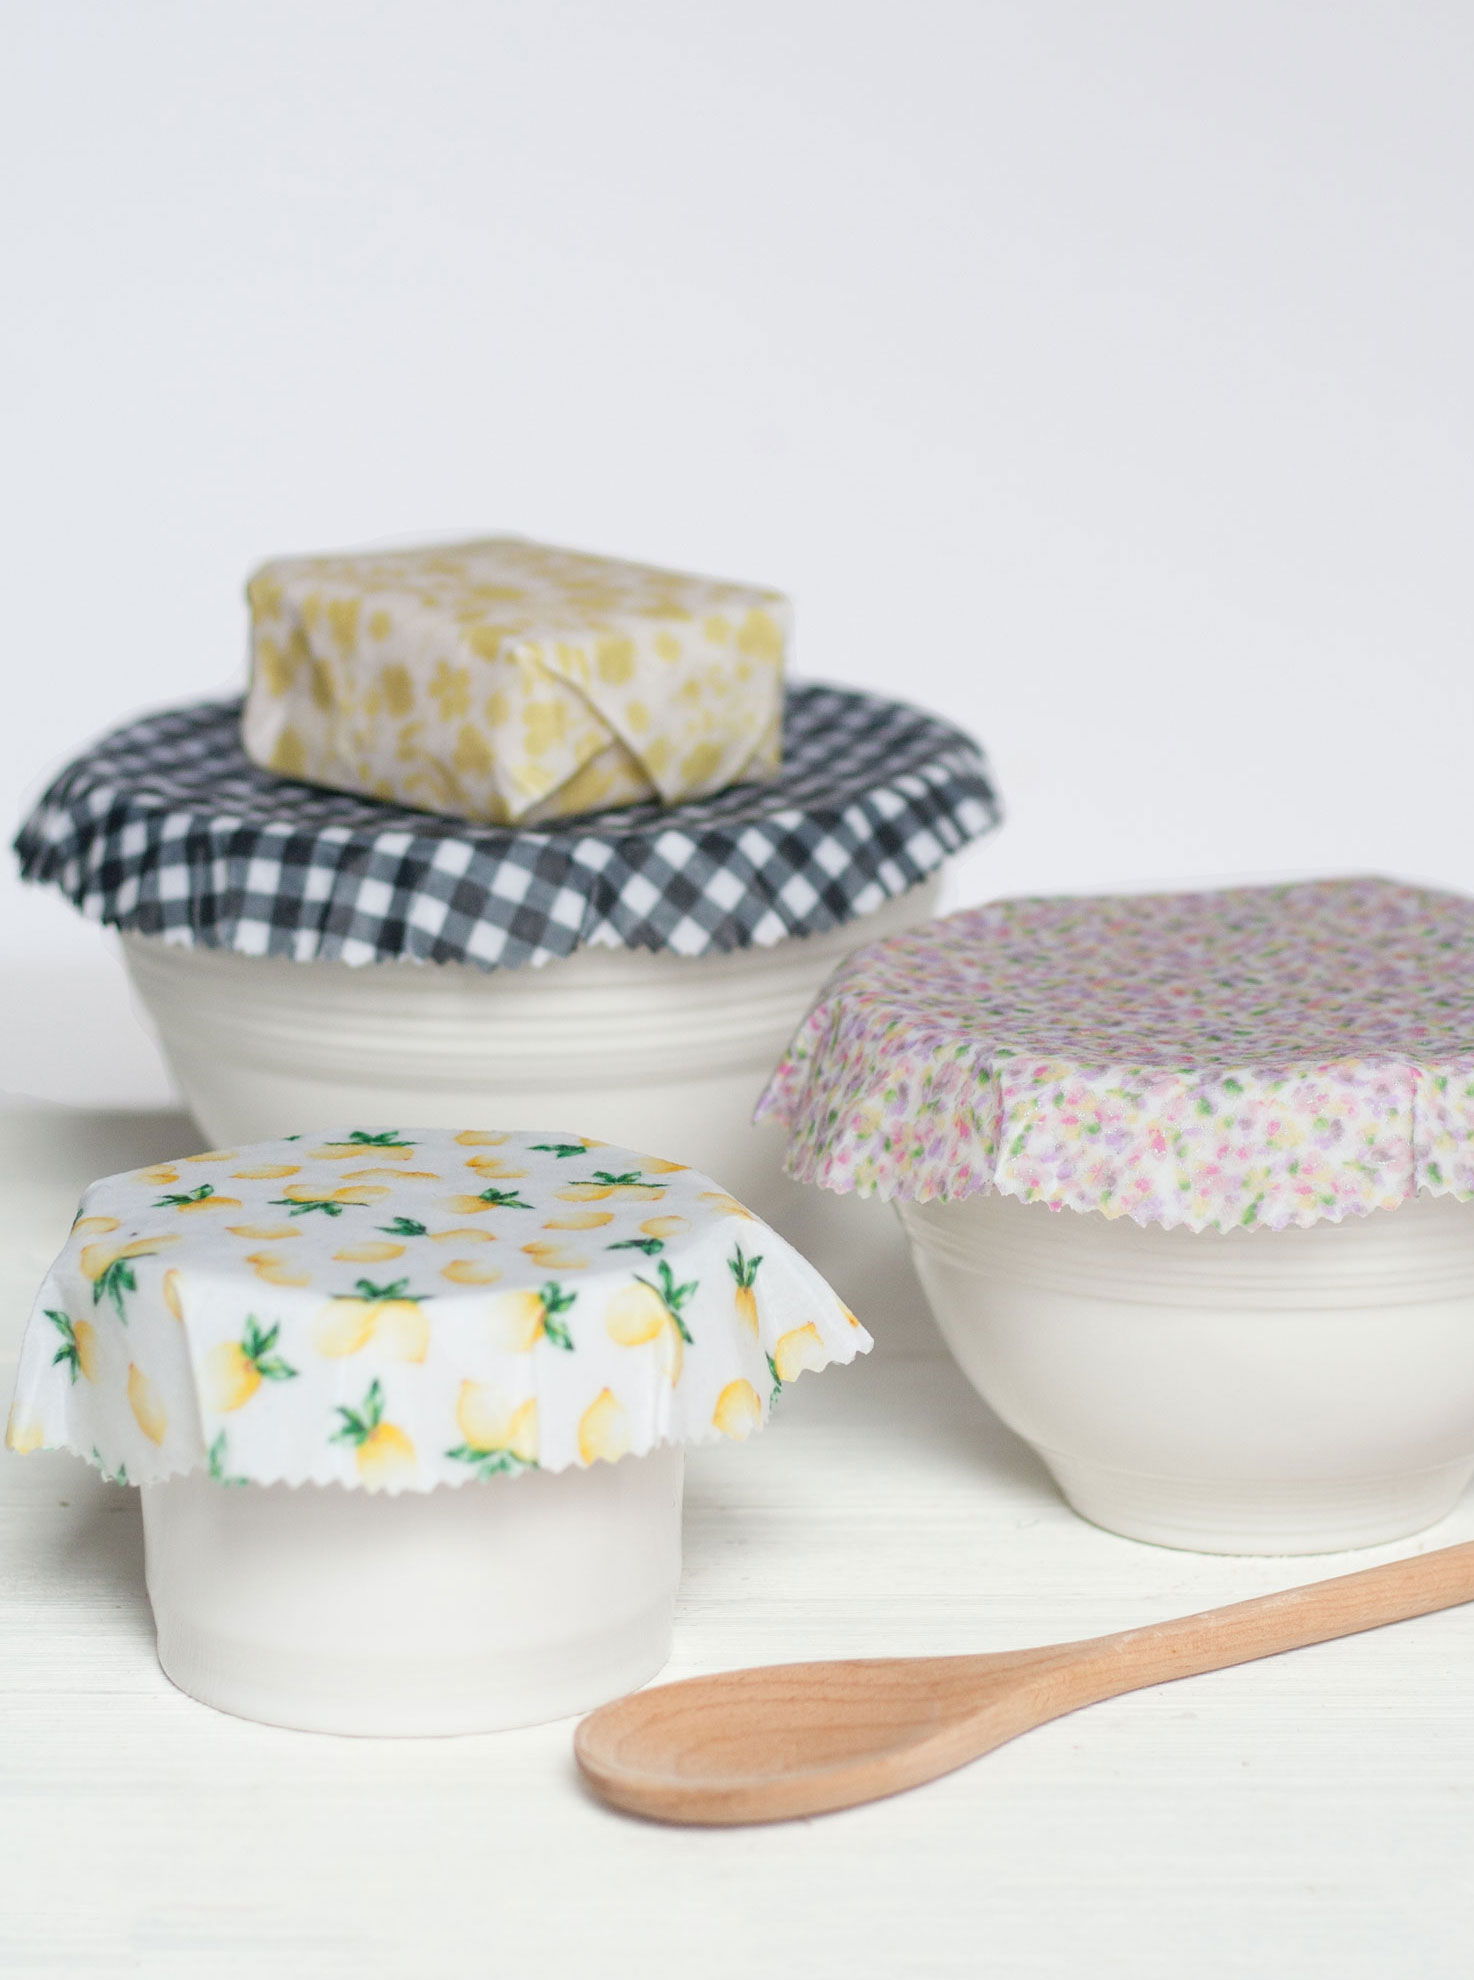 DIY Reusable Oilcloth Bowl Covers - Sugar and Charm